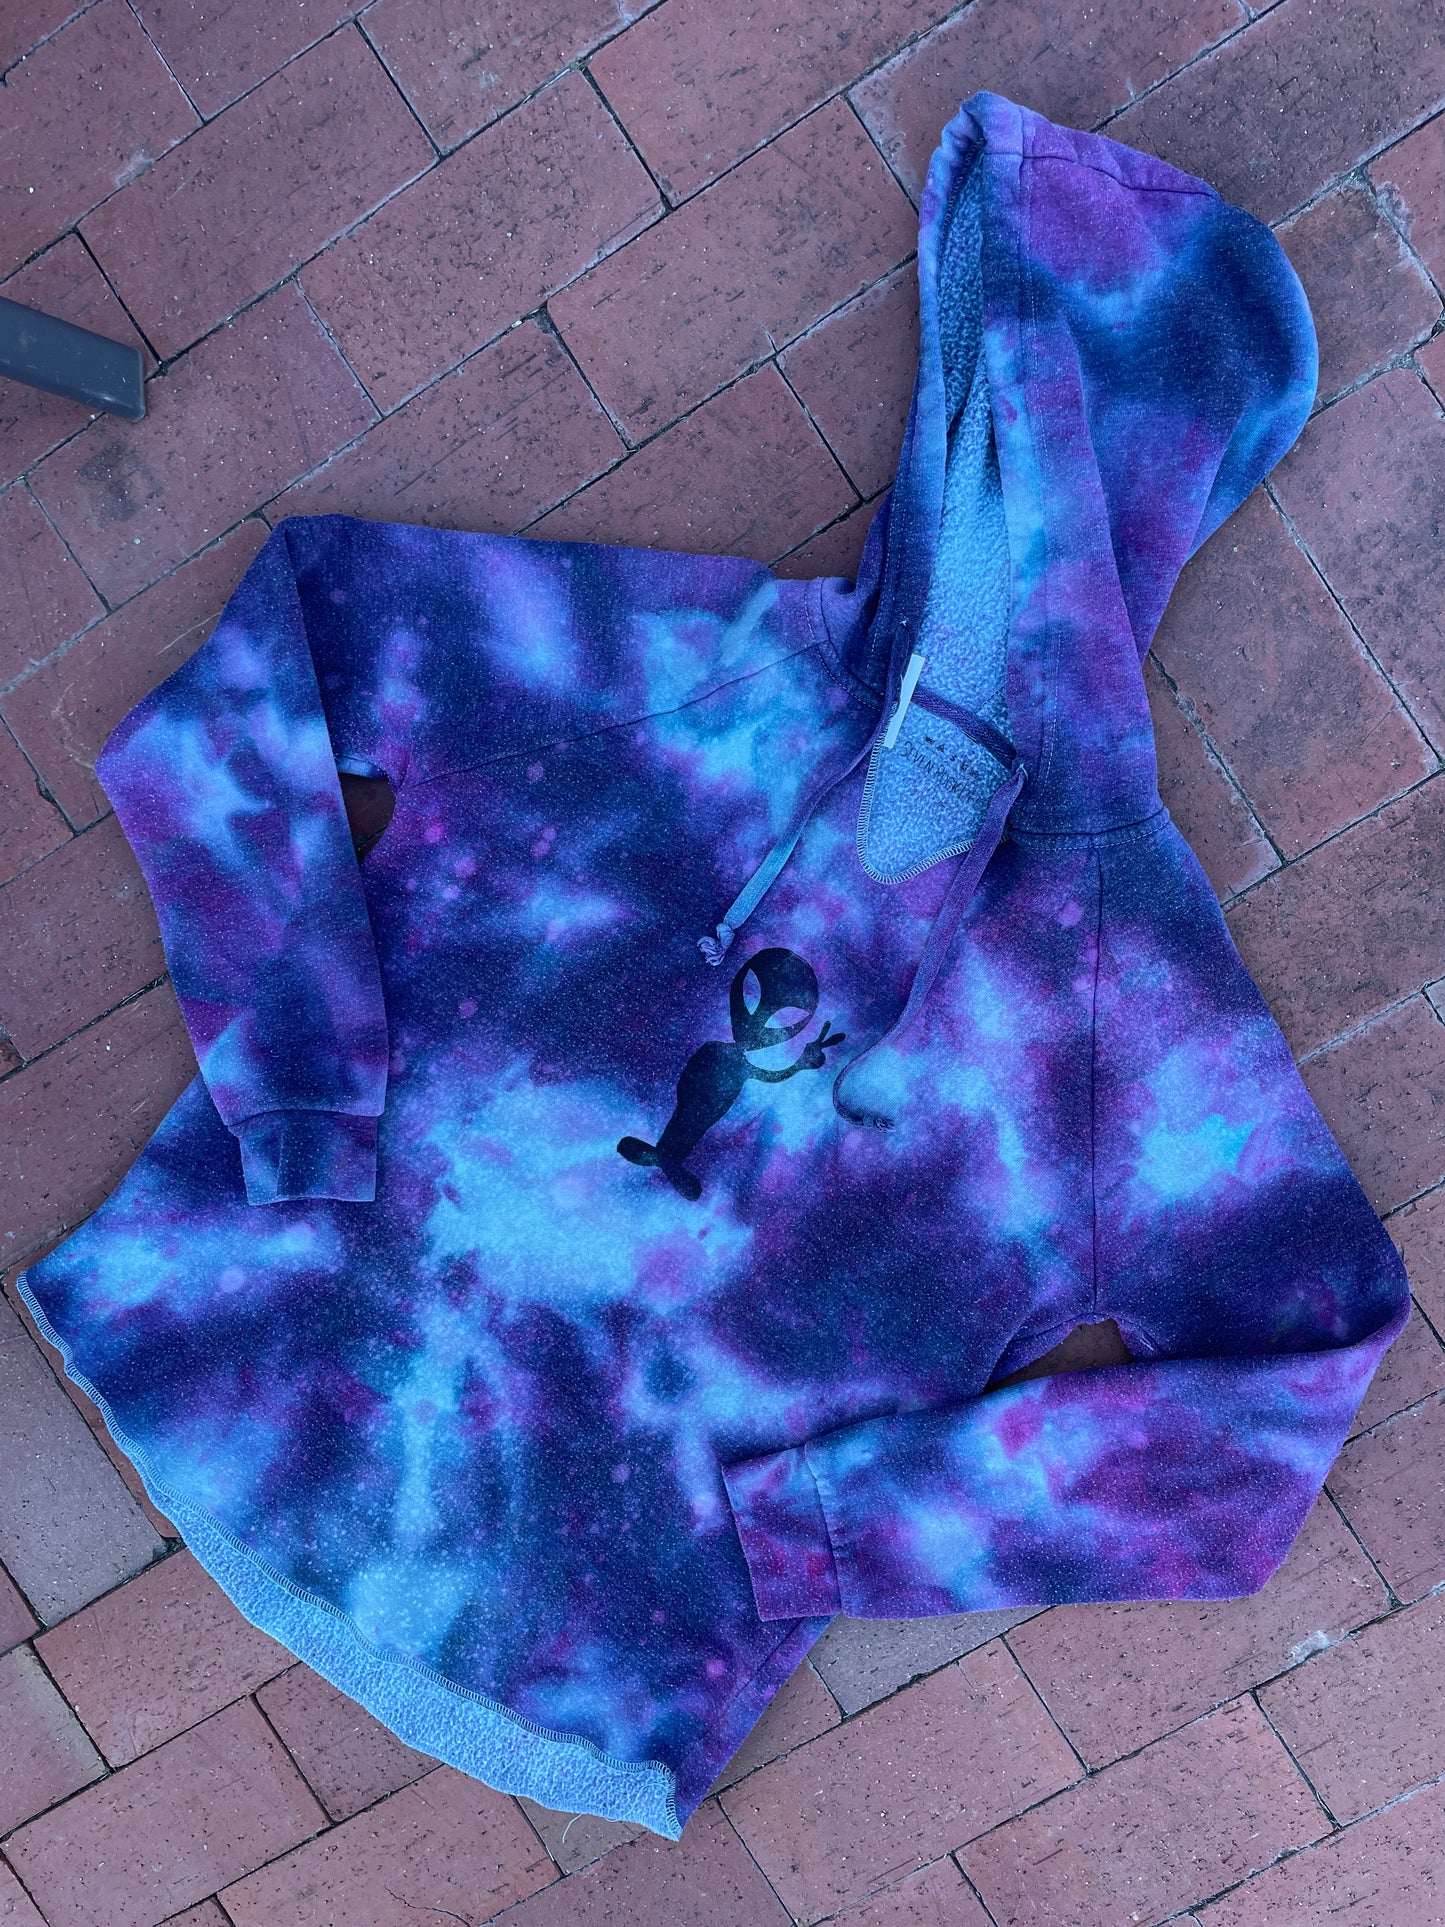 Large Women's Hand-Printed Alien Handmade Galaxy Tie Dye Hoodie | Handmade One-Of-a-Kind Upcycled Purple and Blue Sweatshirt